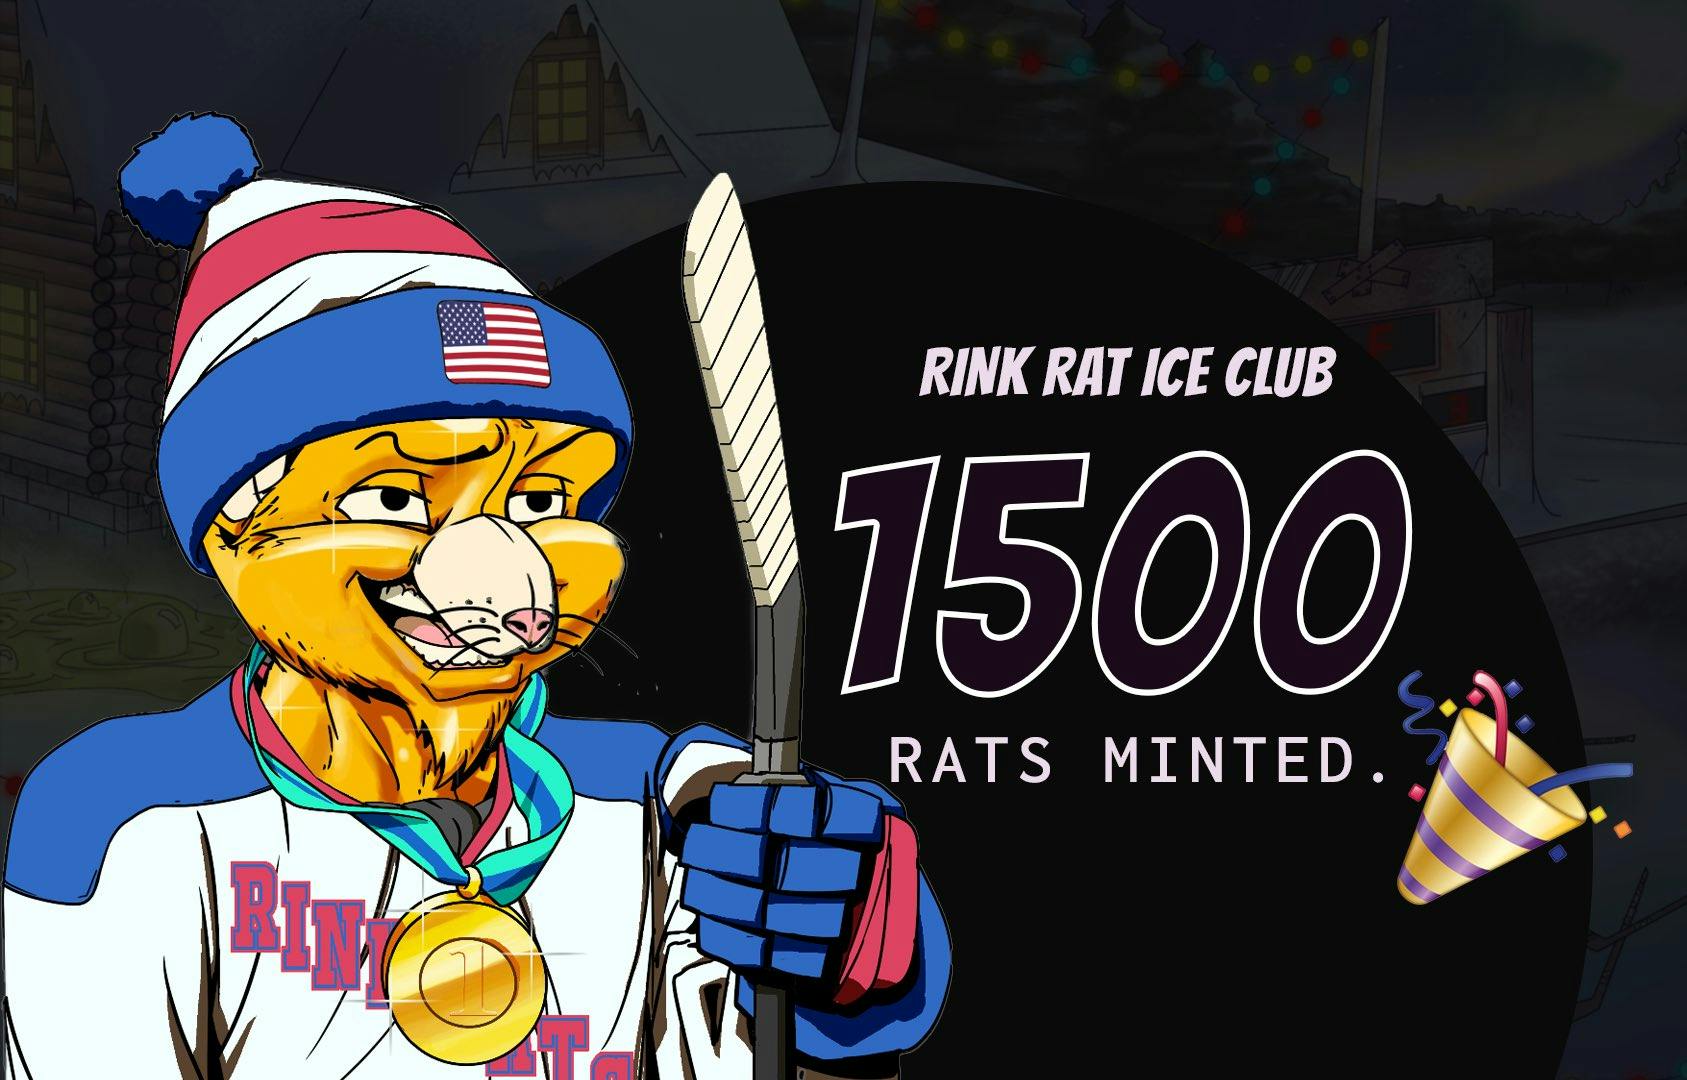 RINK RAT ICE CLUB image